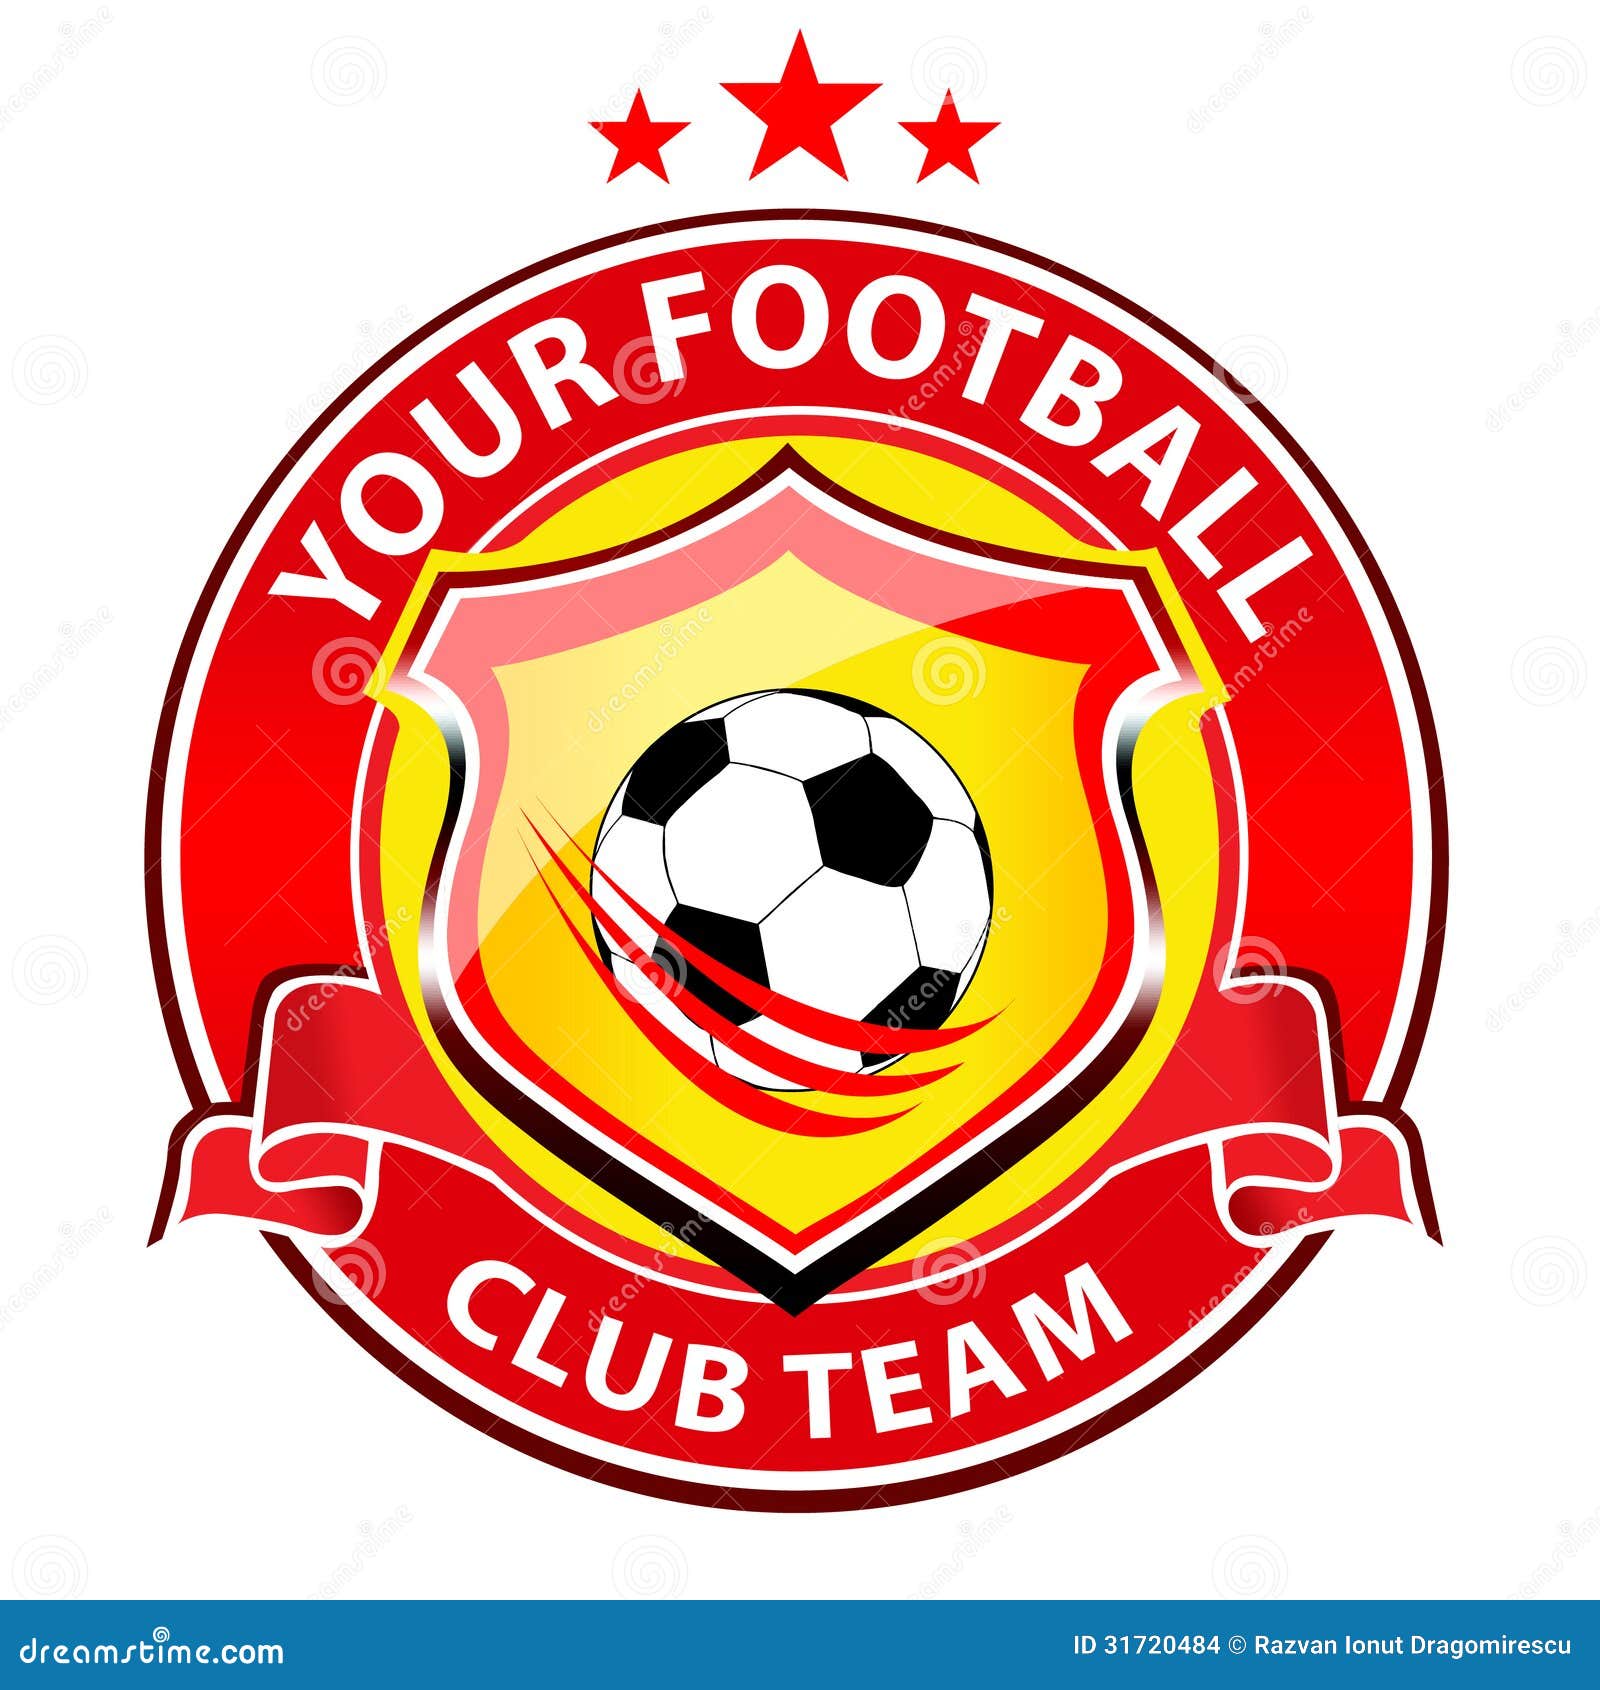 warmte Alstublieft Umeki Soccer Team Logo stock illustration. Illustration of modern - 31720484